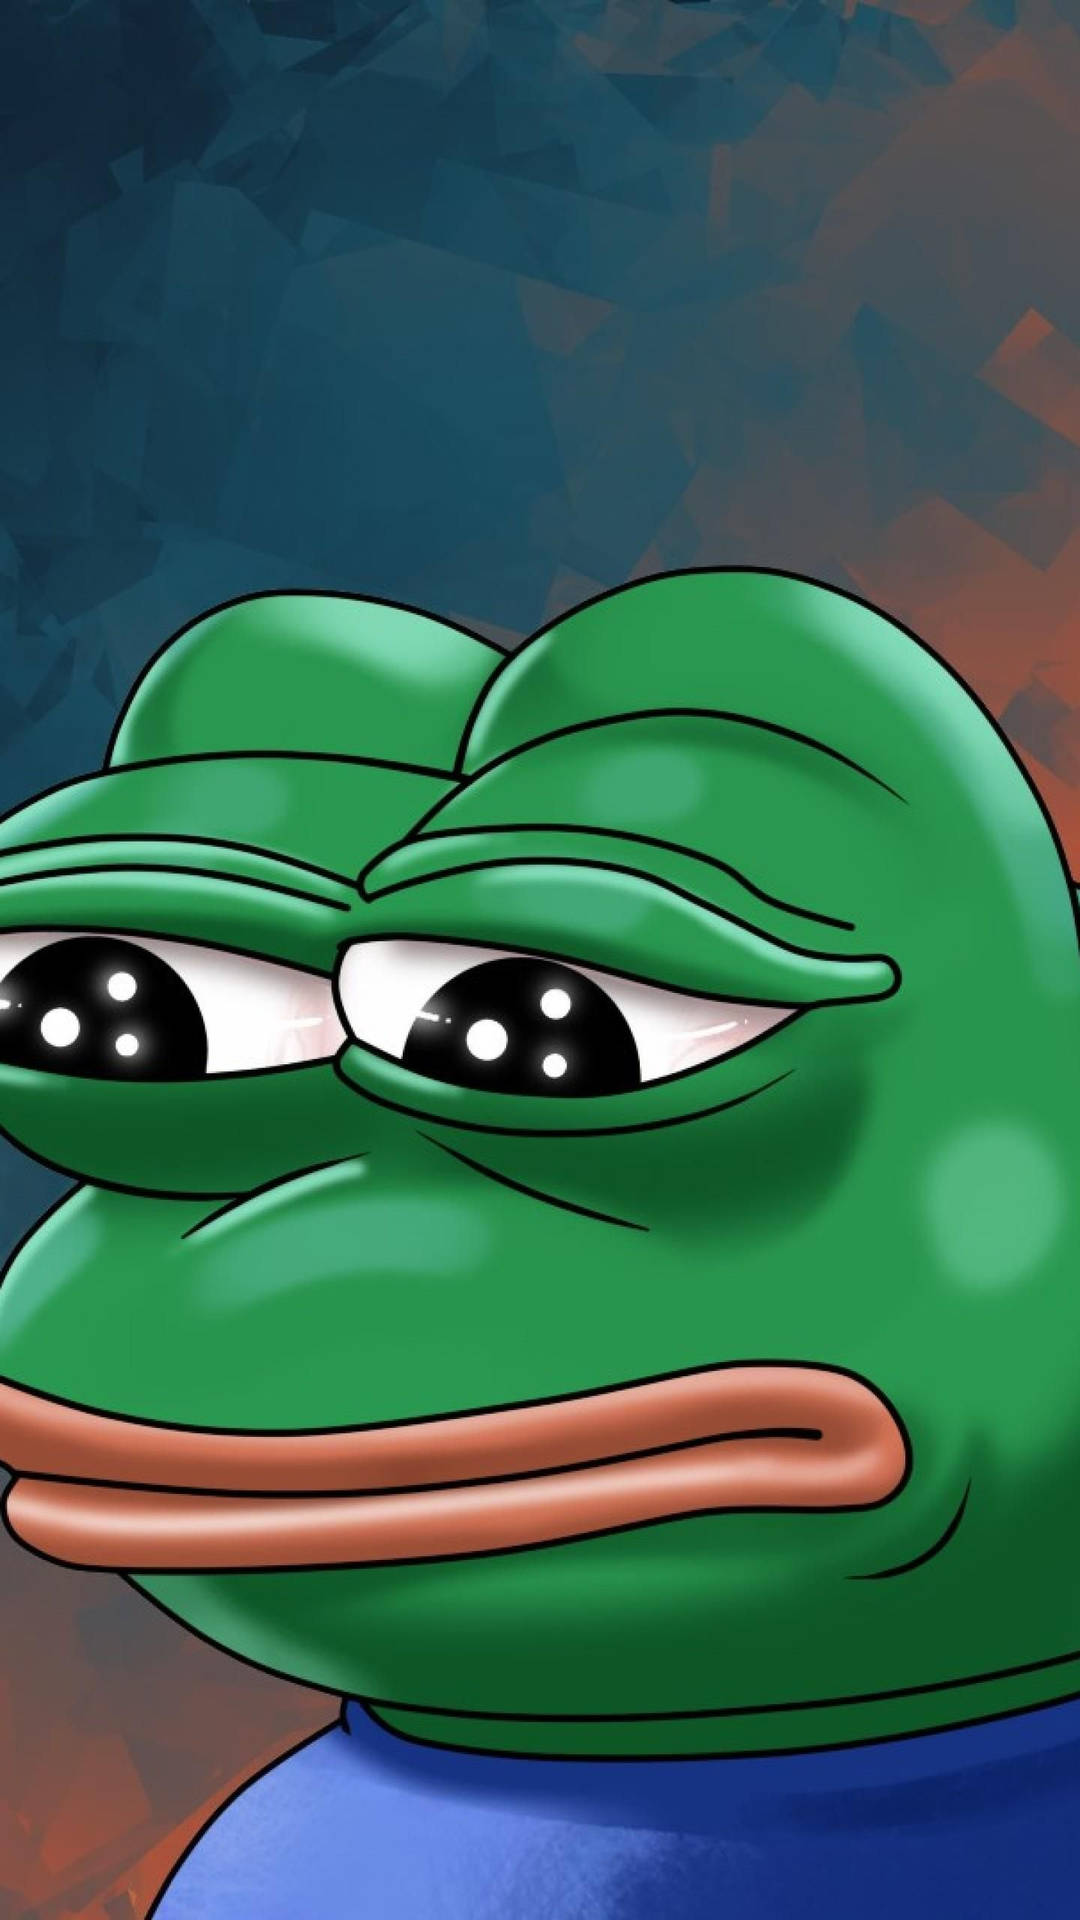 Pepe The Frog Digital Art Background